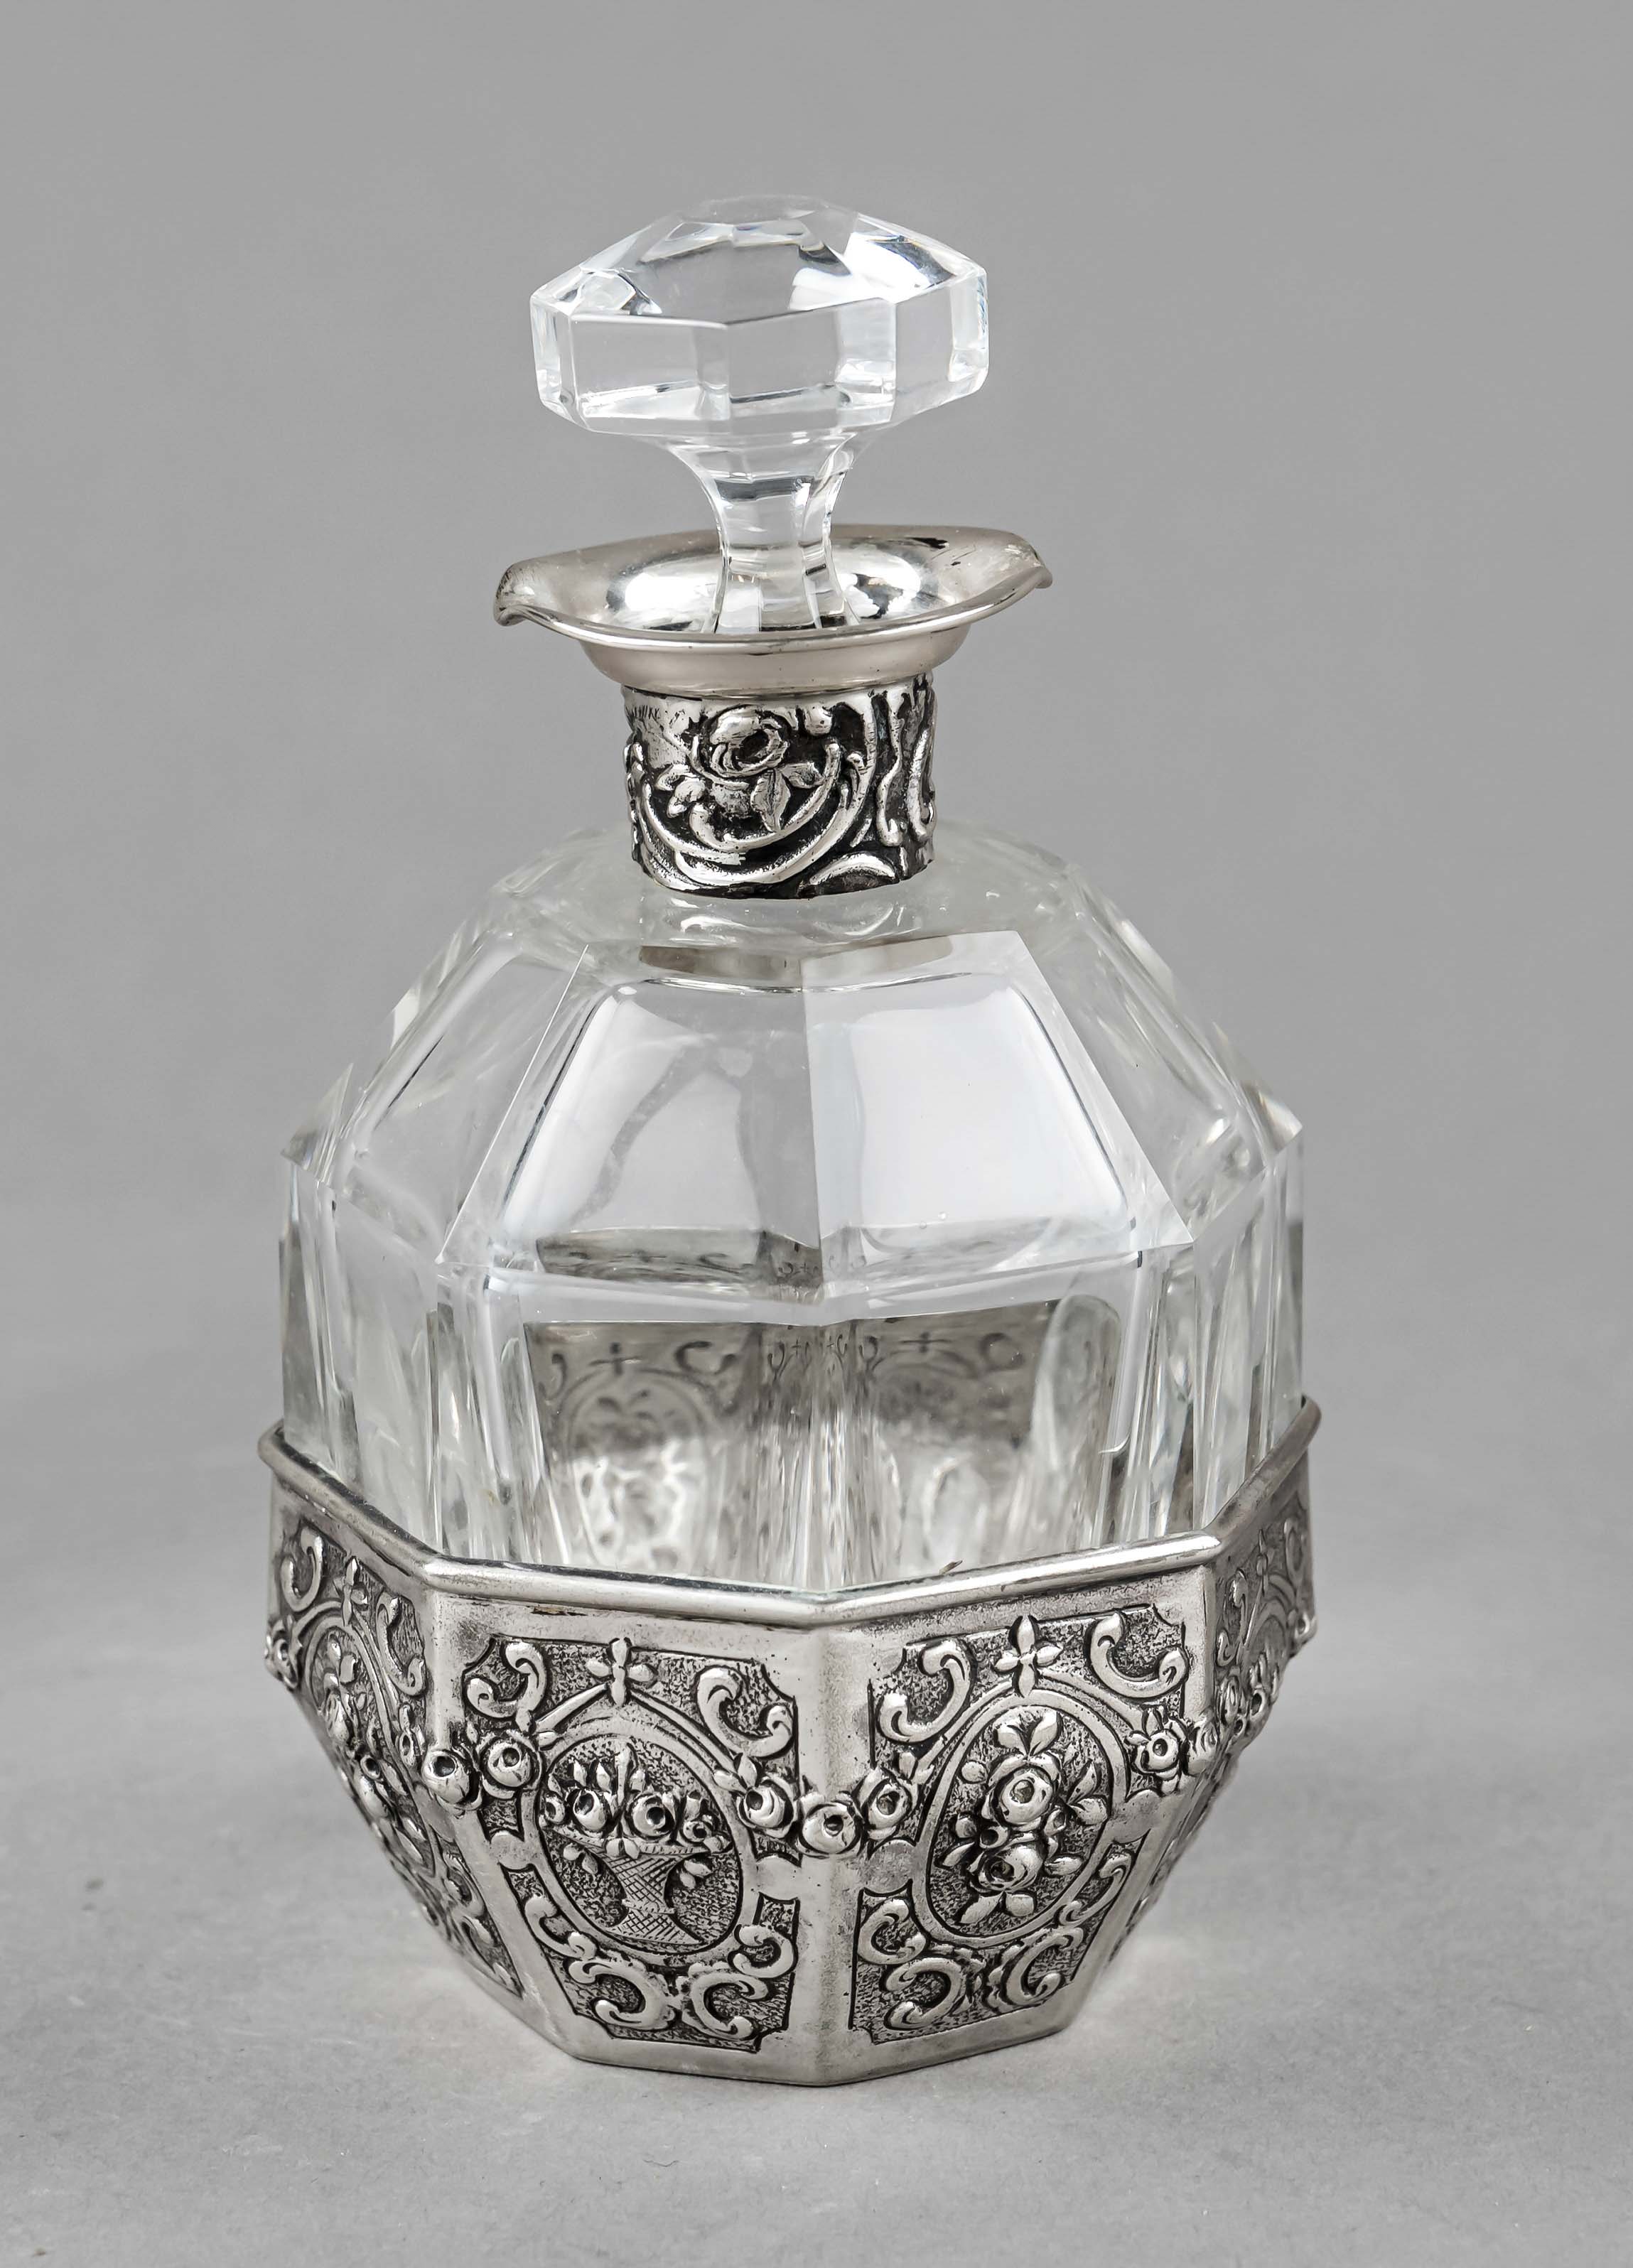 Silver mounted flacon, German, c. 1900, maker's mark Wilhelm Weinranck, Hanau, silver 800/000, stand